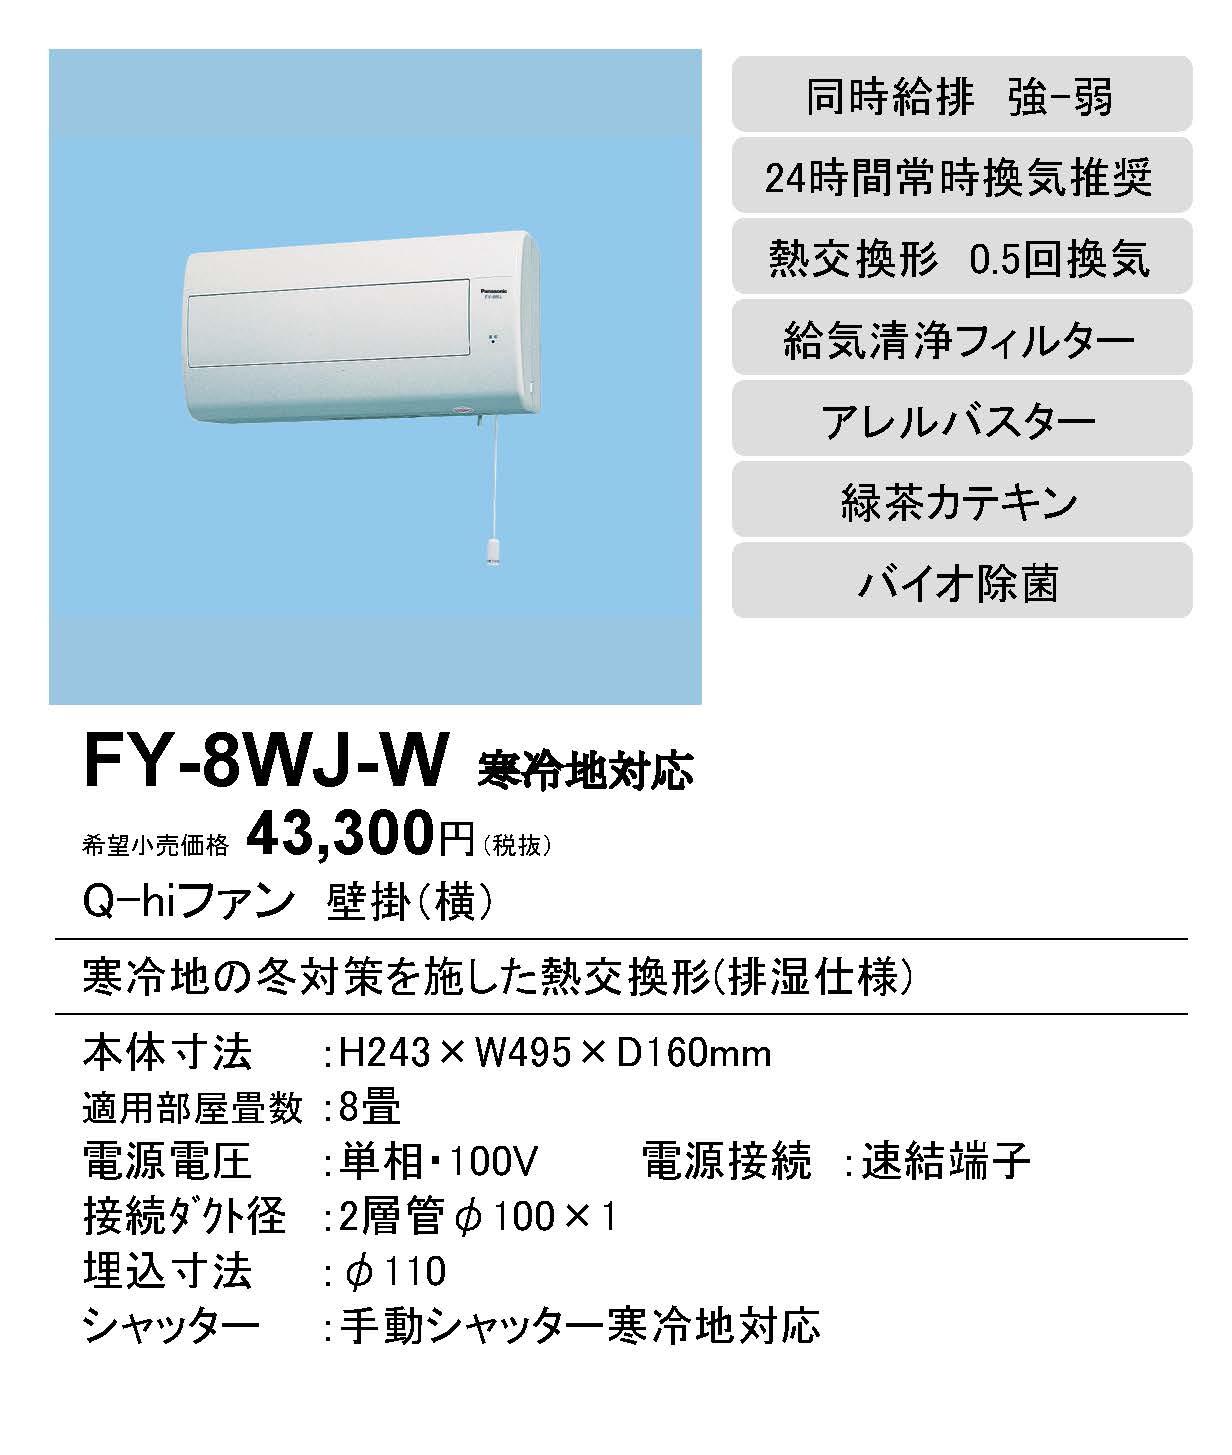 FY-8WJ-W | 換気扇 | パナソニック Panasonic Q-hiファン壁掛形・1 